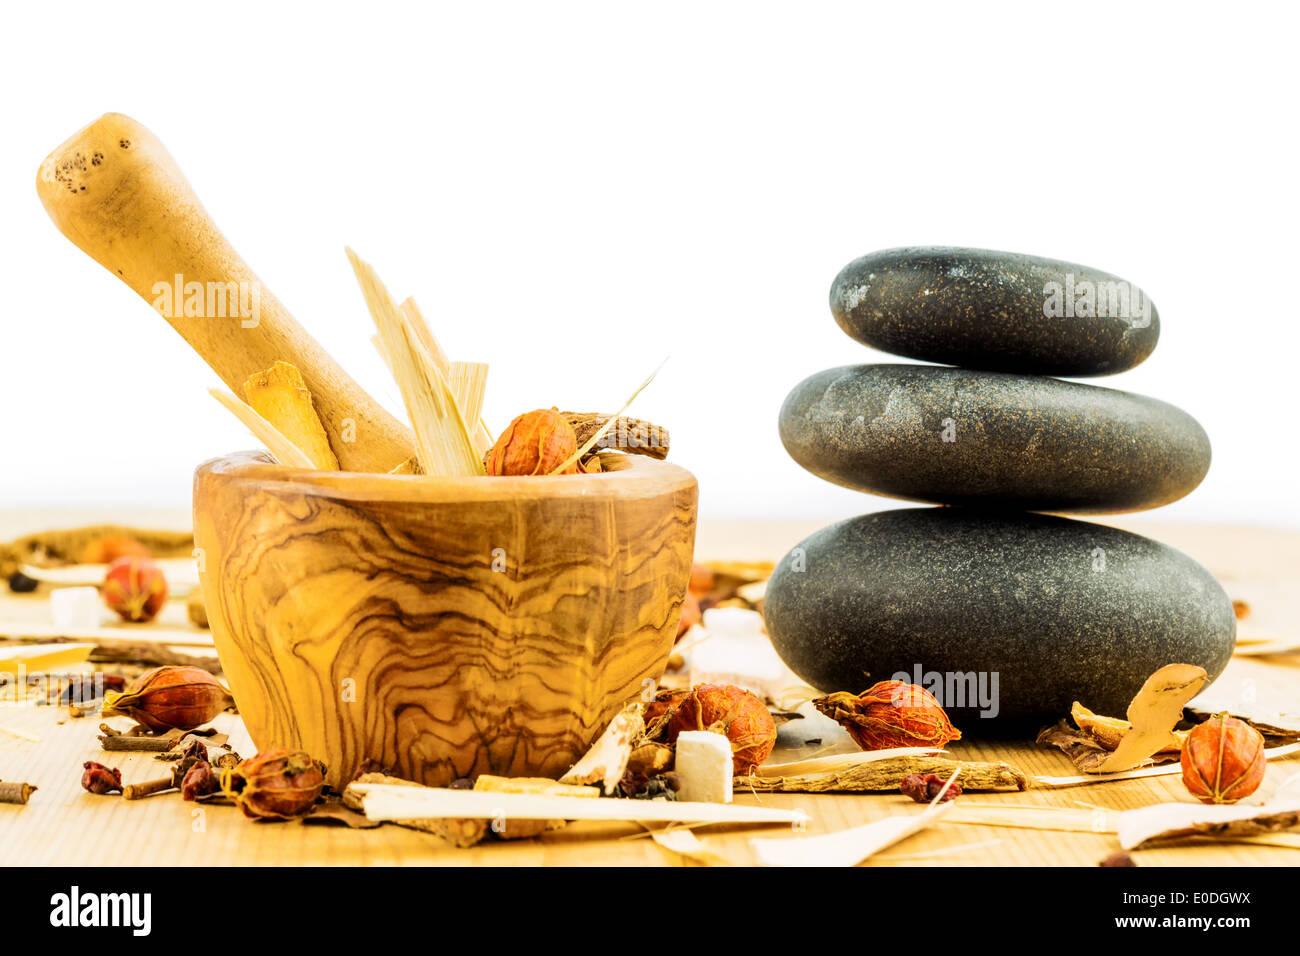 Natural Healing Method Using Alternative Herbal Medicine